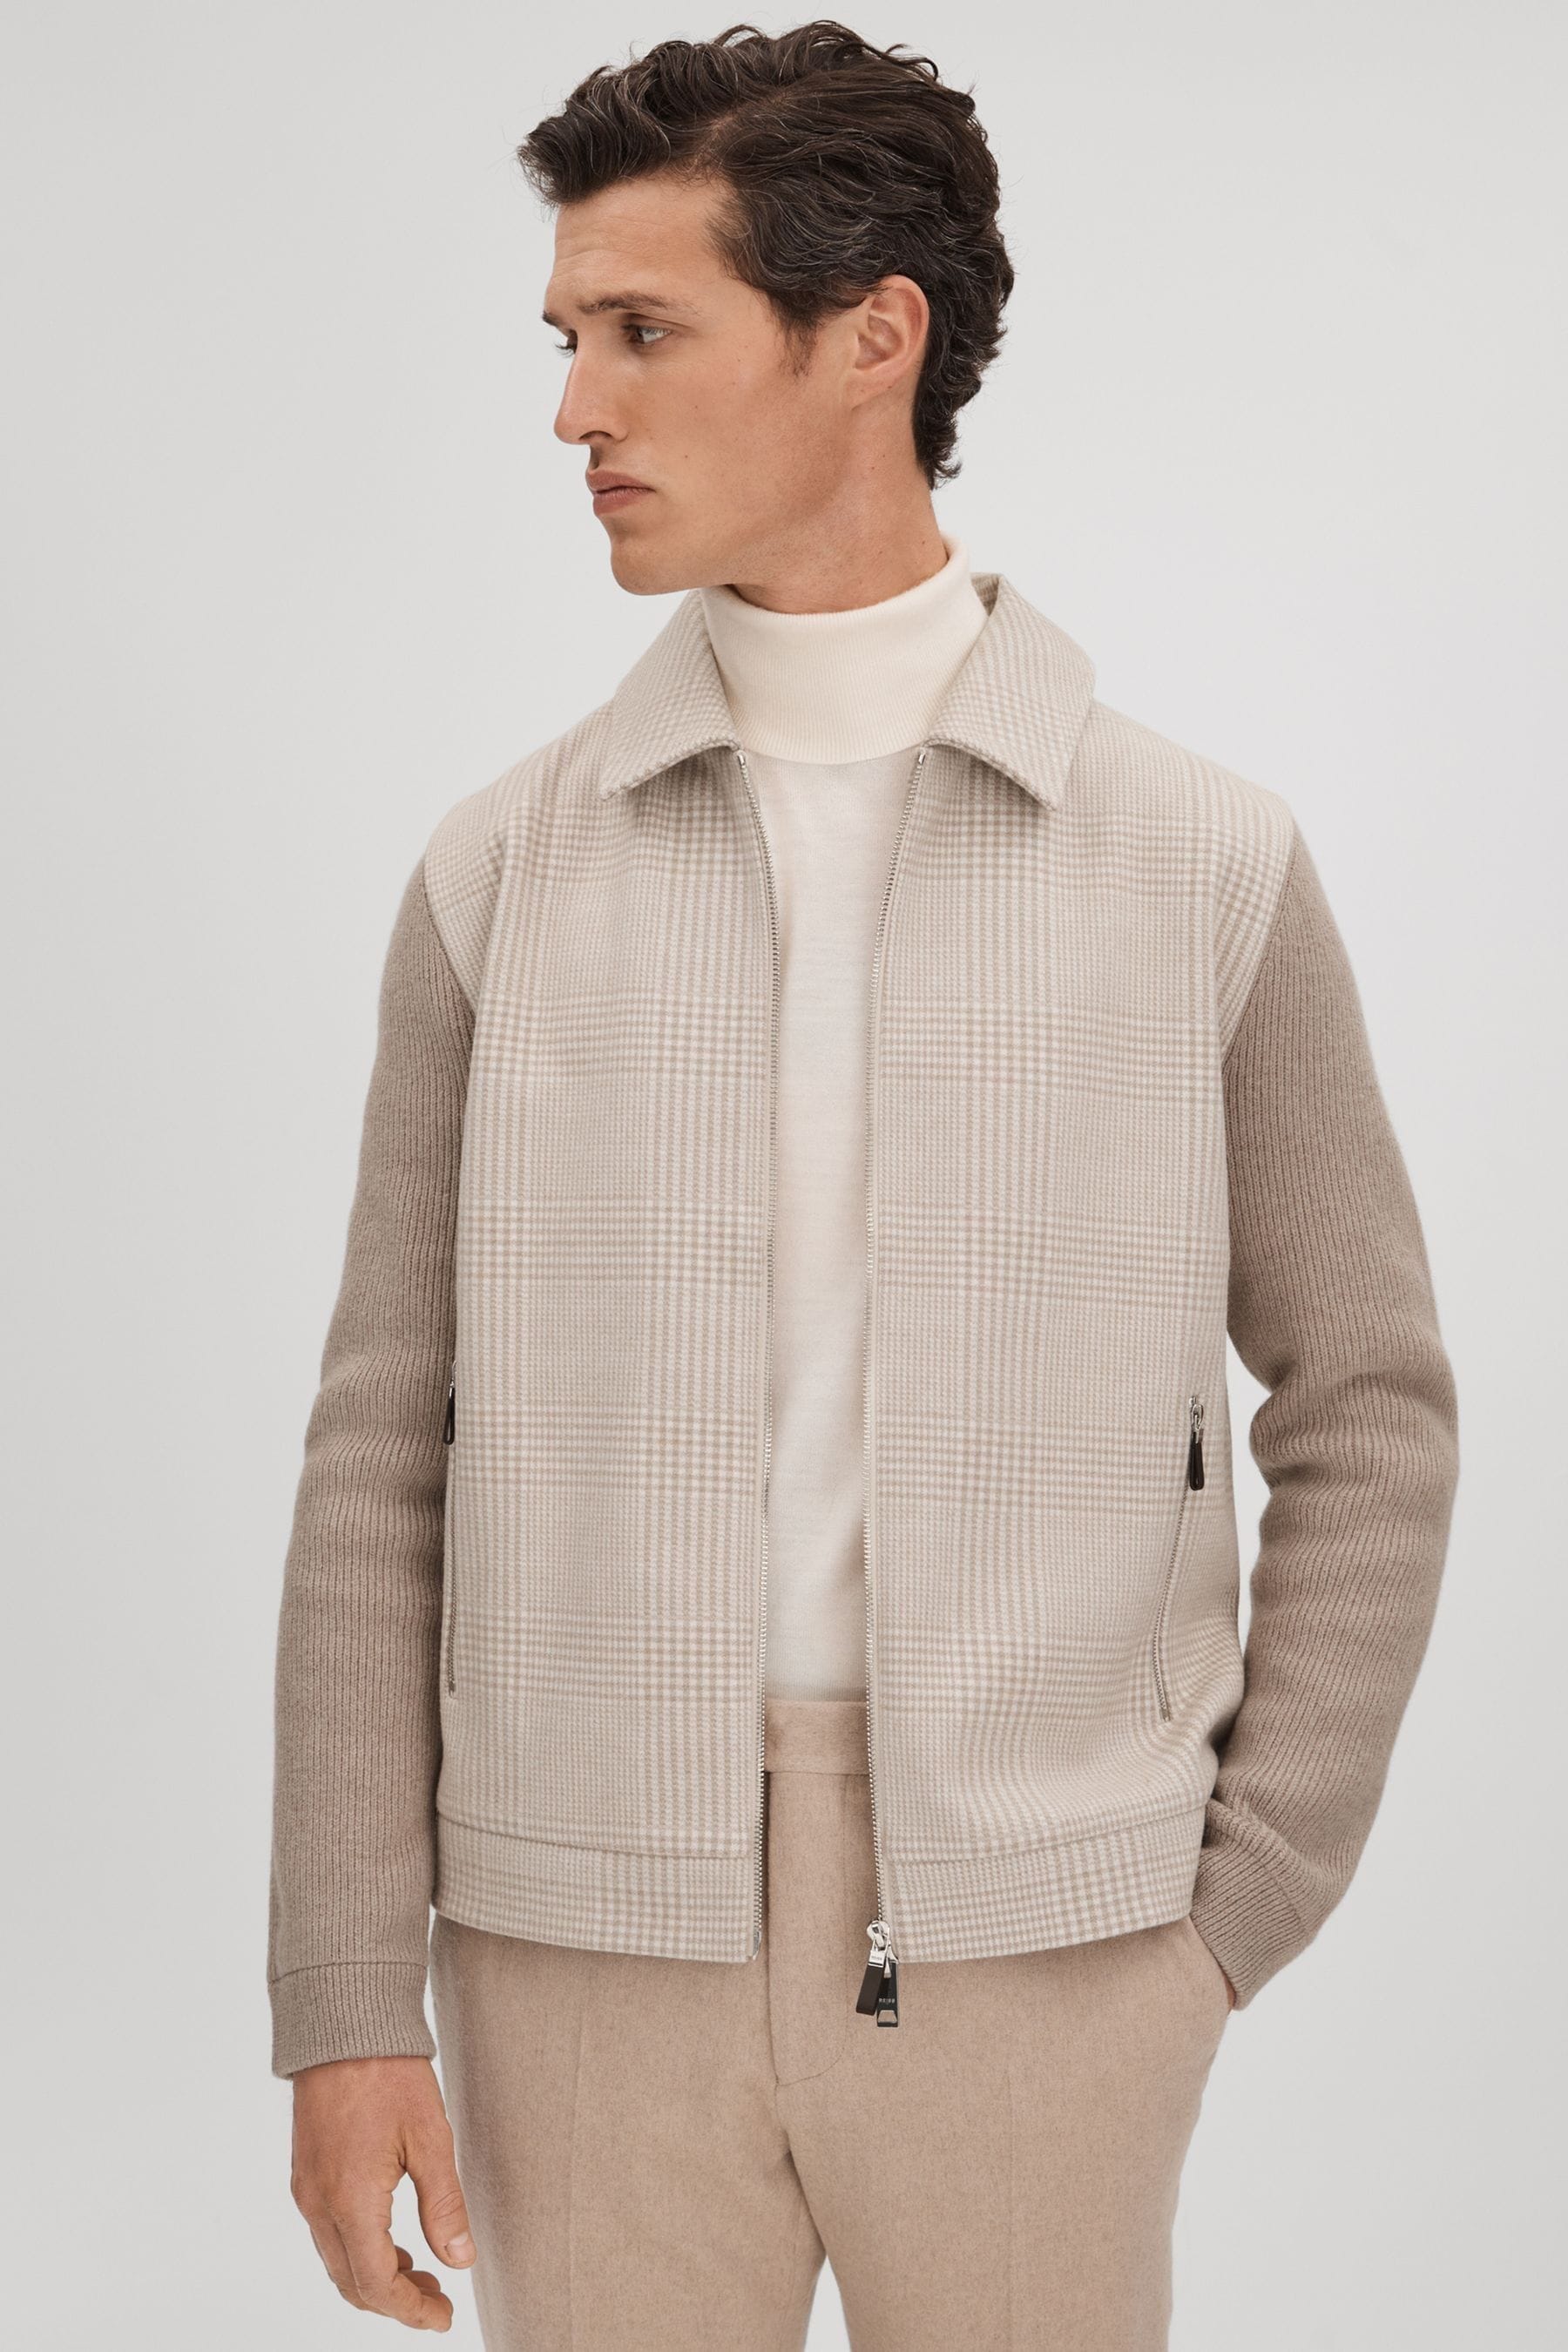 Reiss Max - Oatmeal Hybrid Knit Zip-through Jacket, L